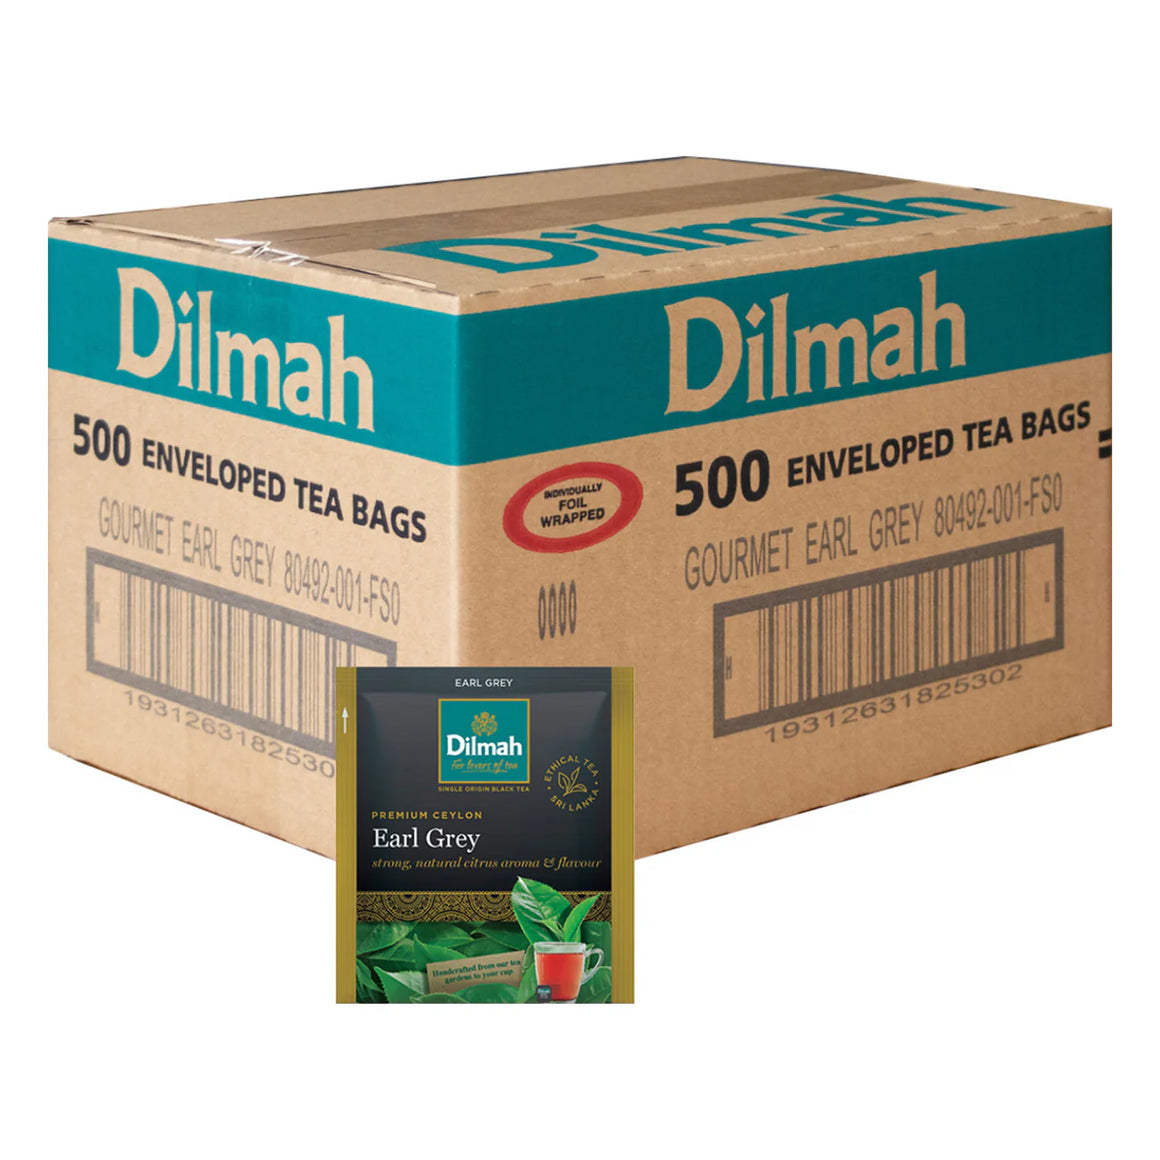 Dilmah Earl Grey Black Tea 500 Foil Enveloped Teabags